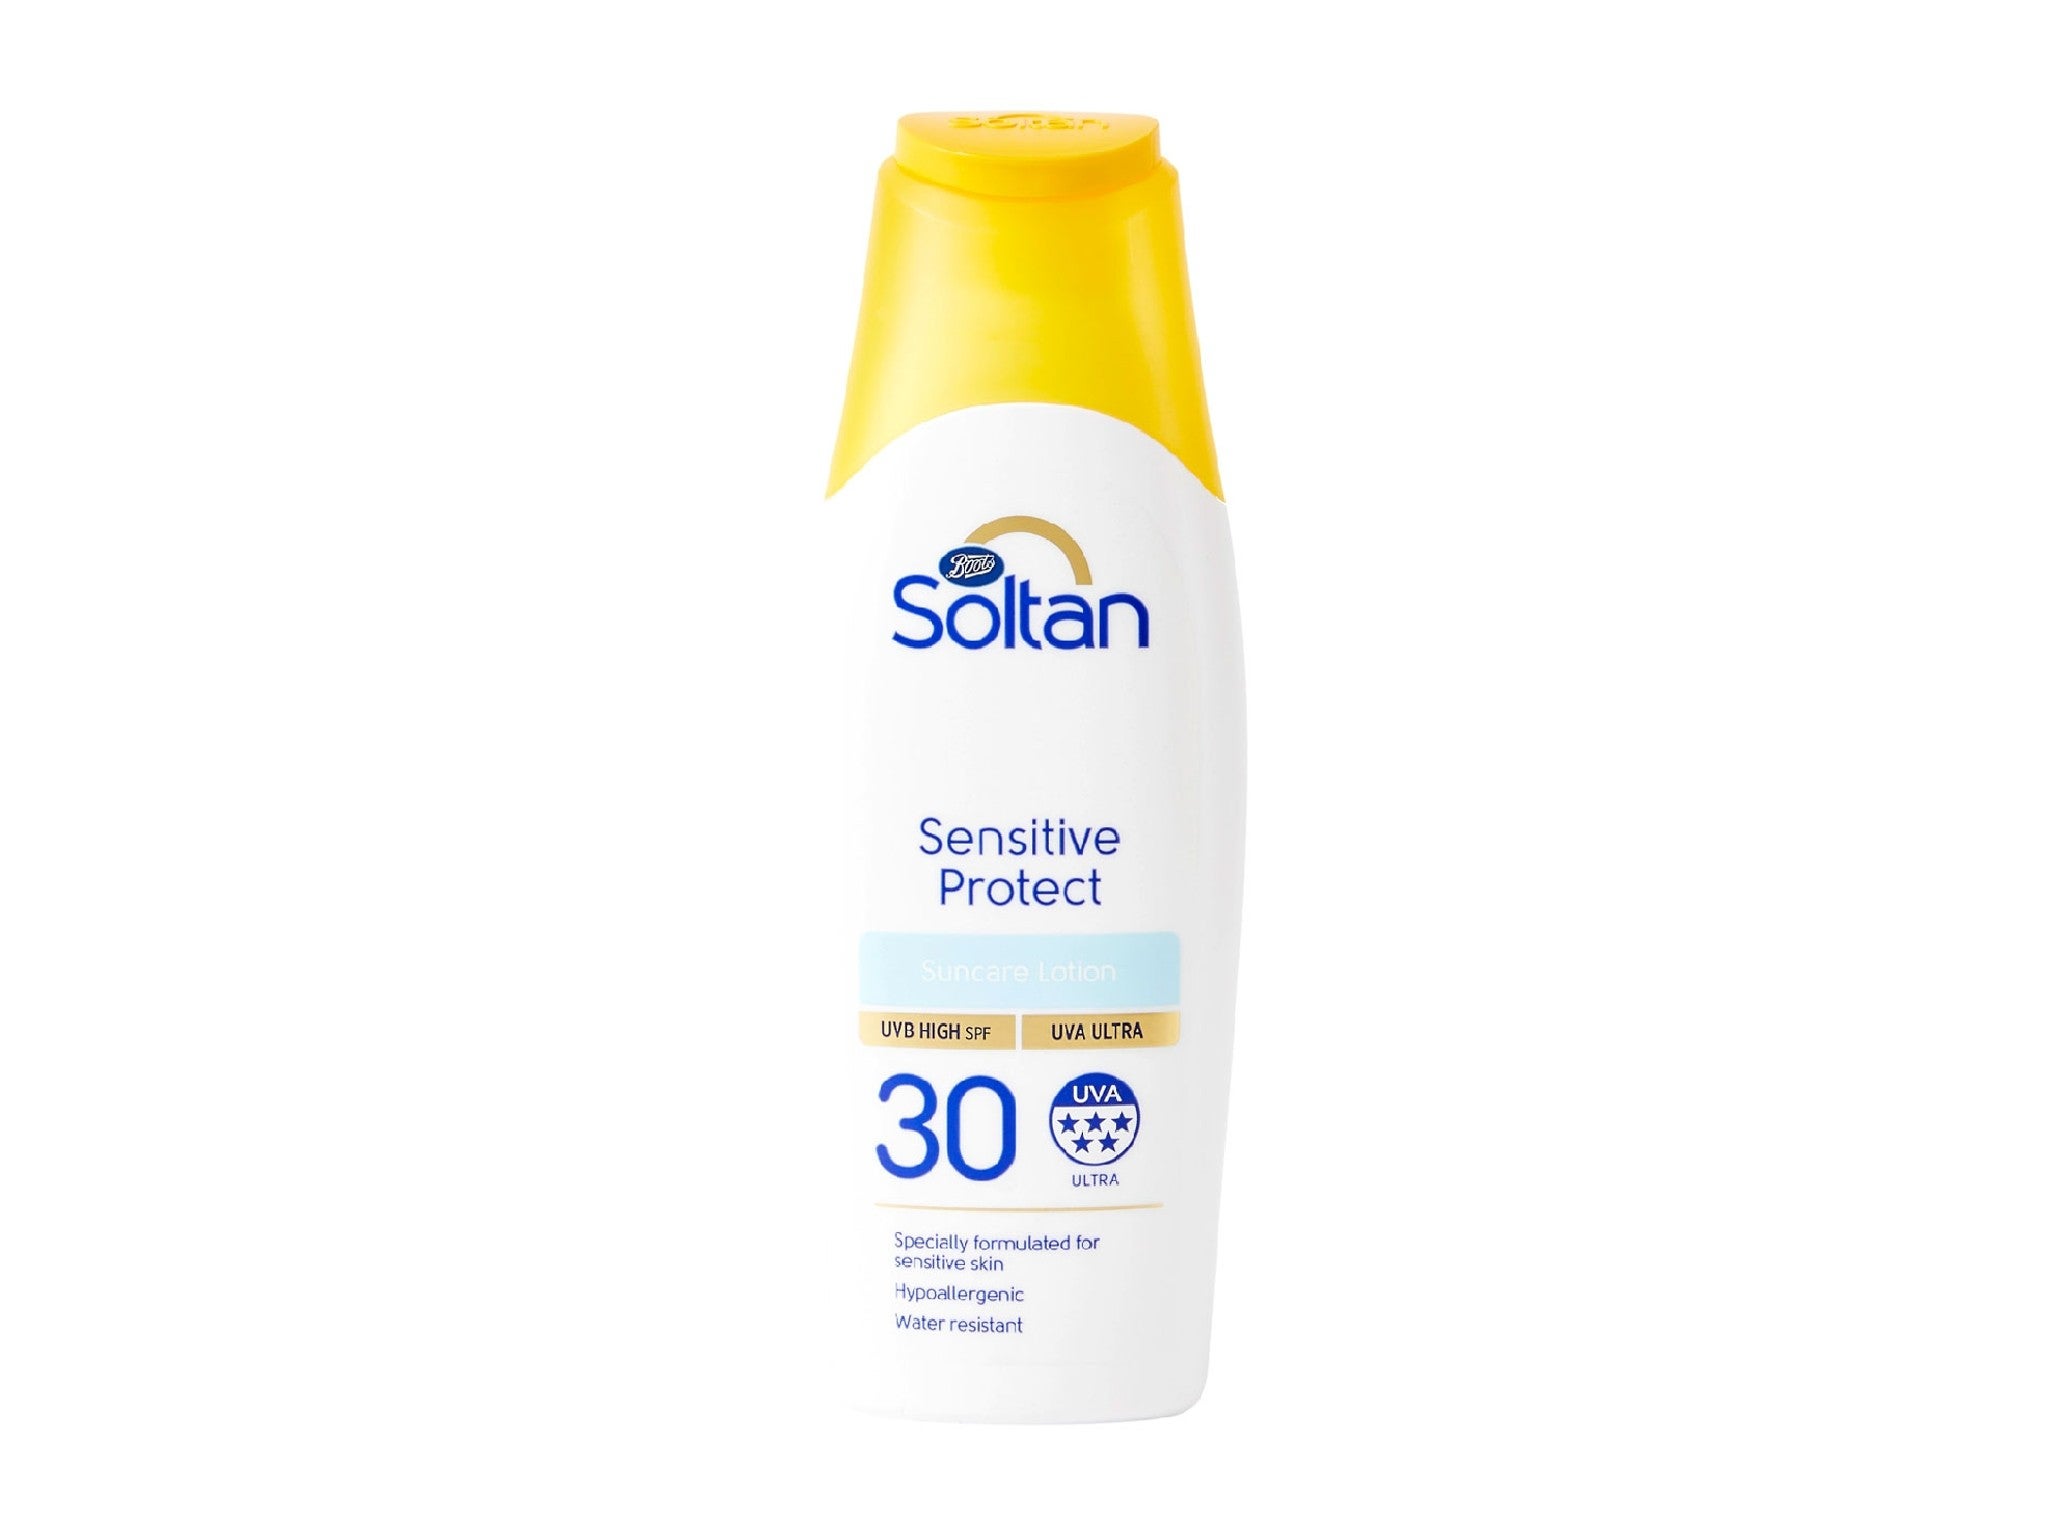 Soltan sensitive lotion SPF30  indybest